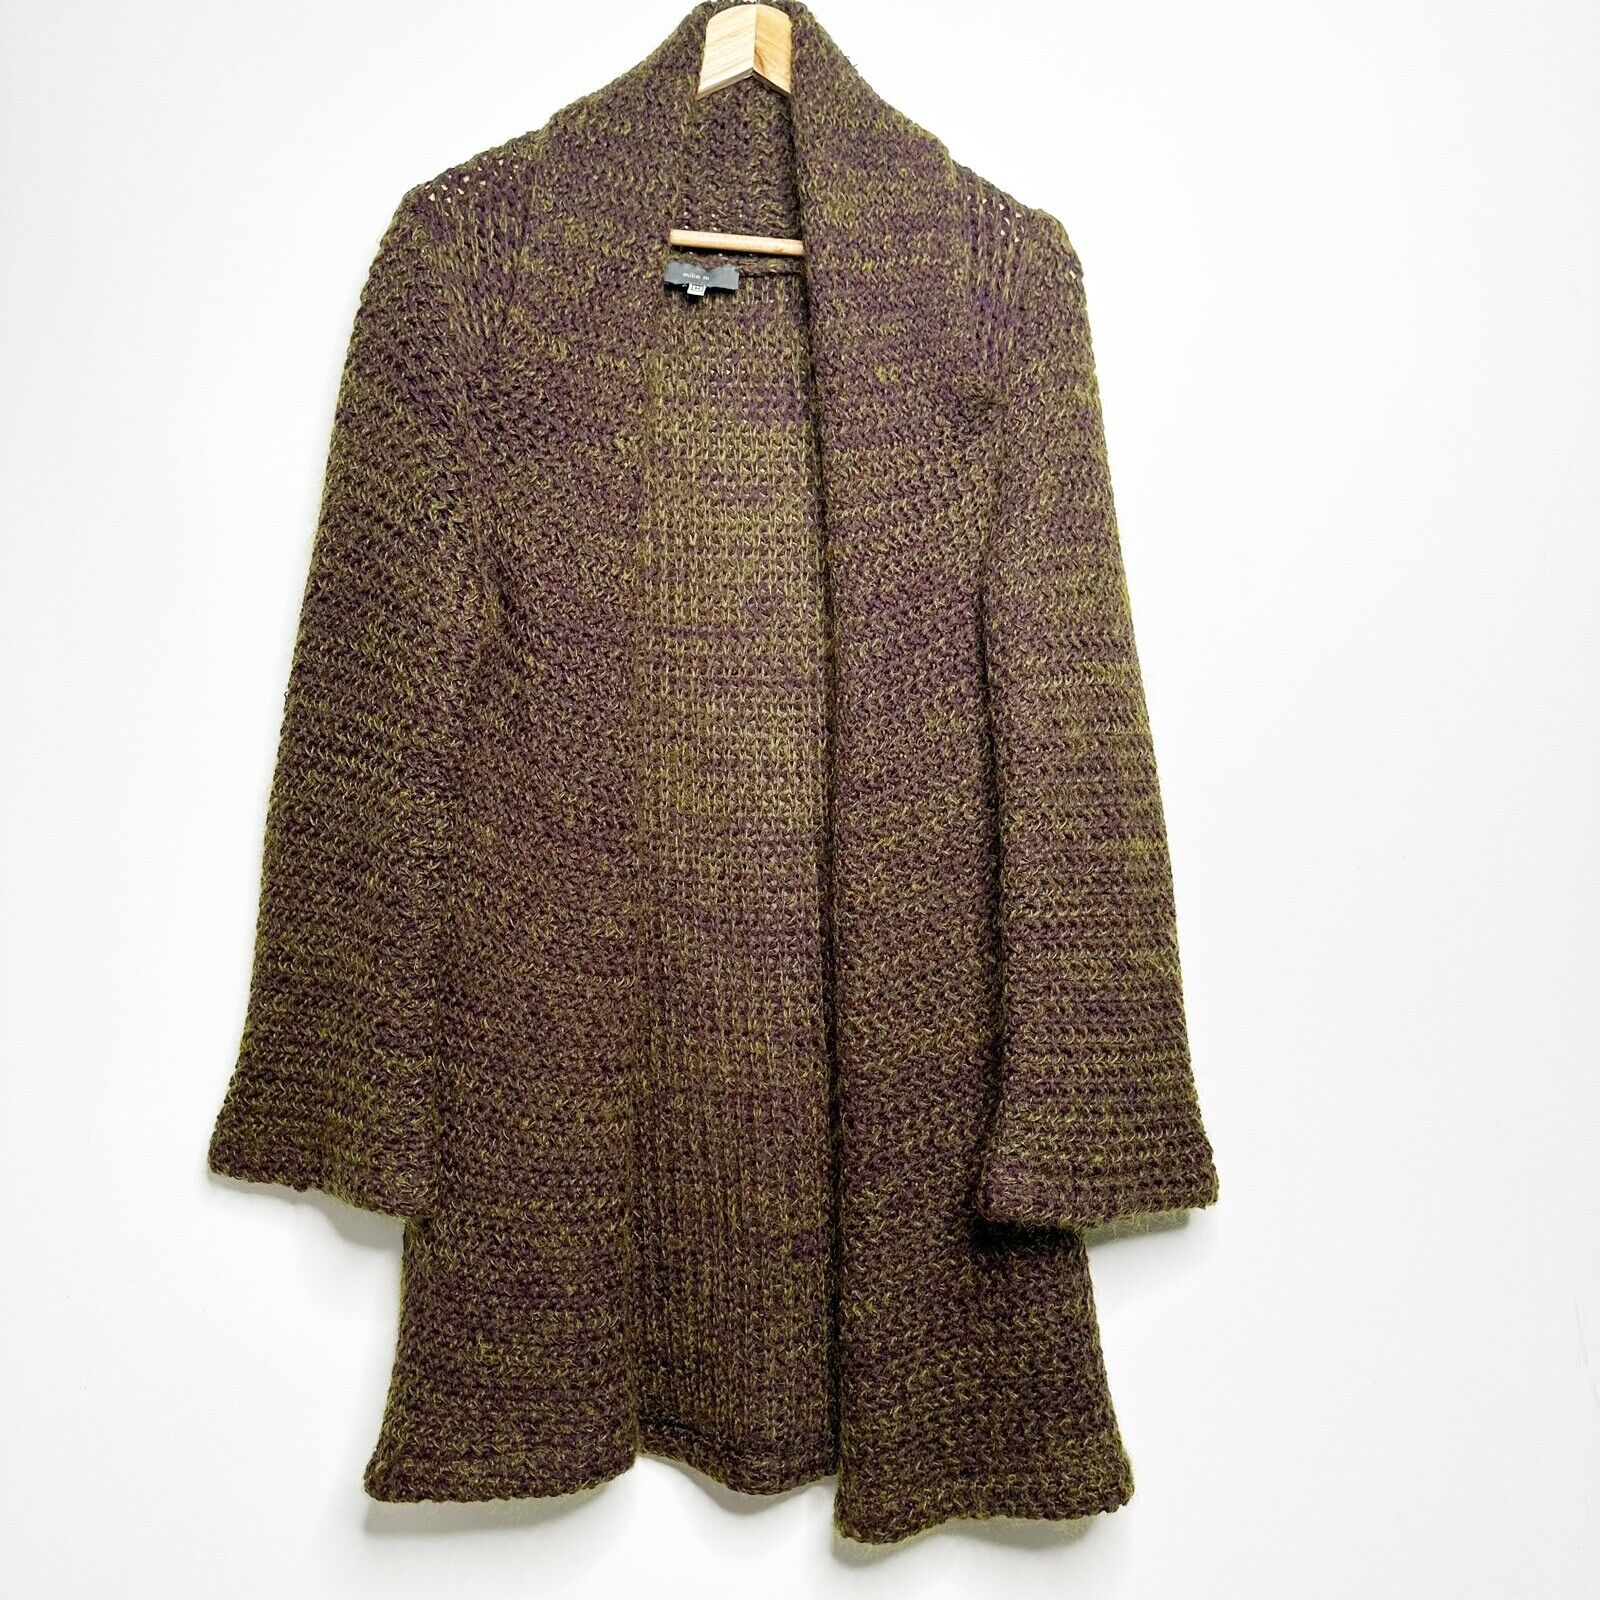 Milia M Milia Maroun 100% Wool Open Front Cardigan Sweater Size Medium